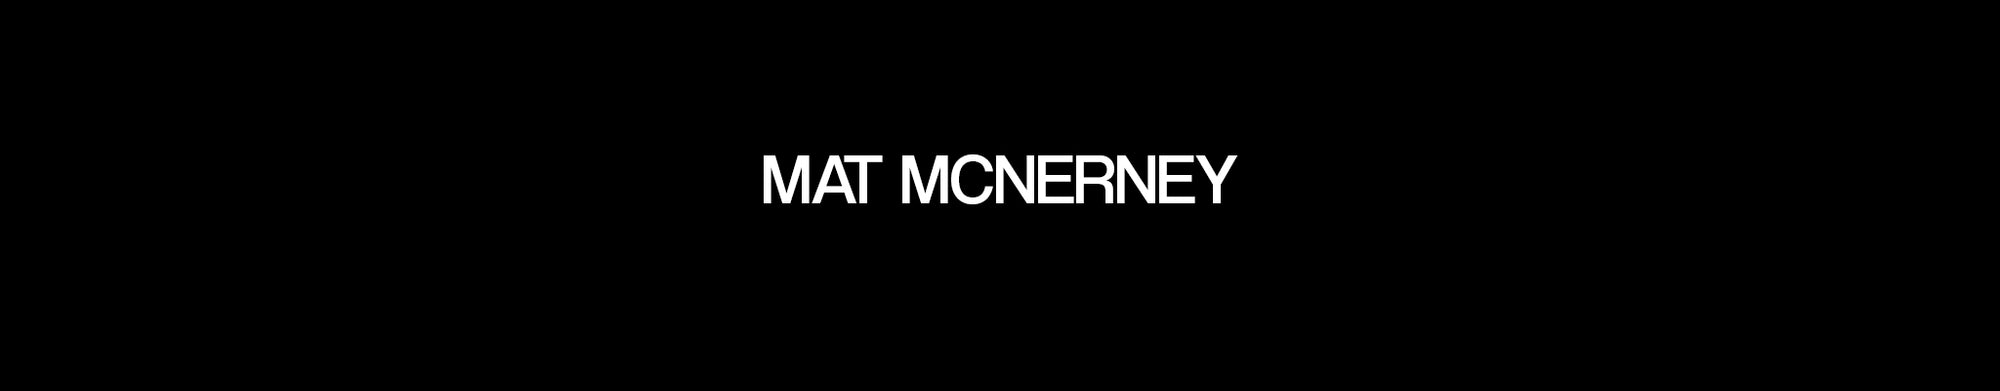 MAT MCNERNEY